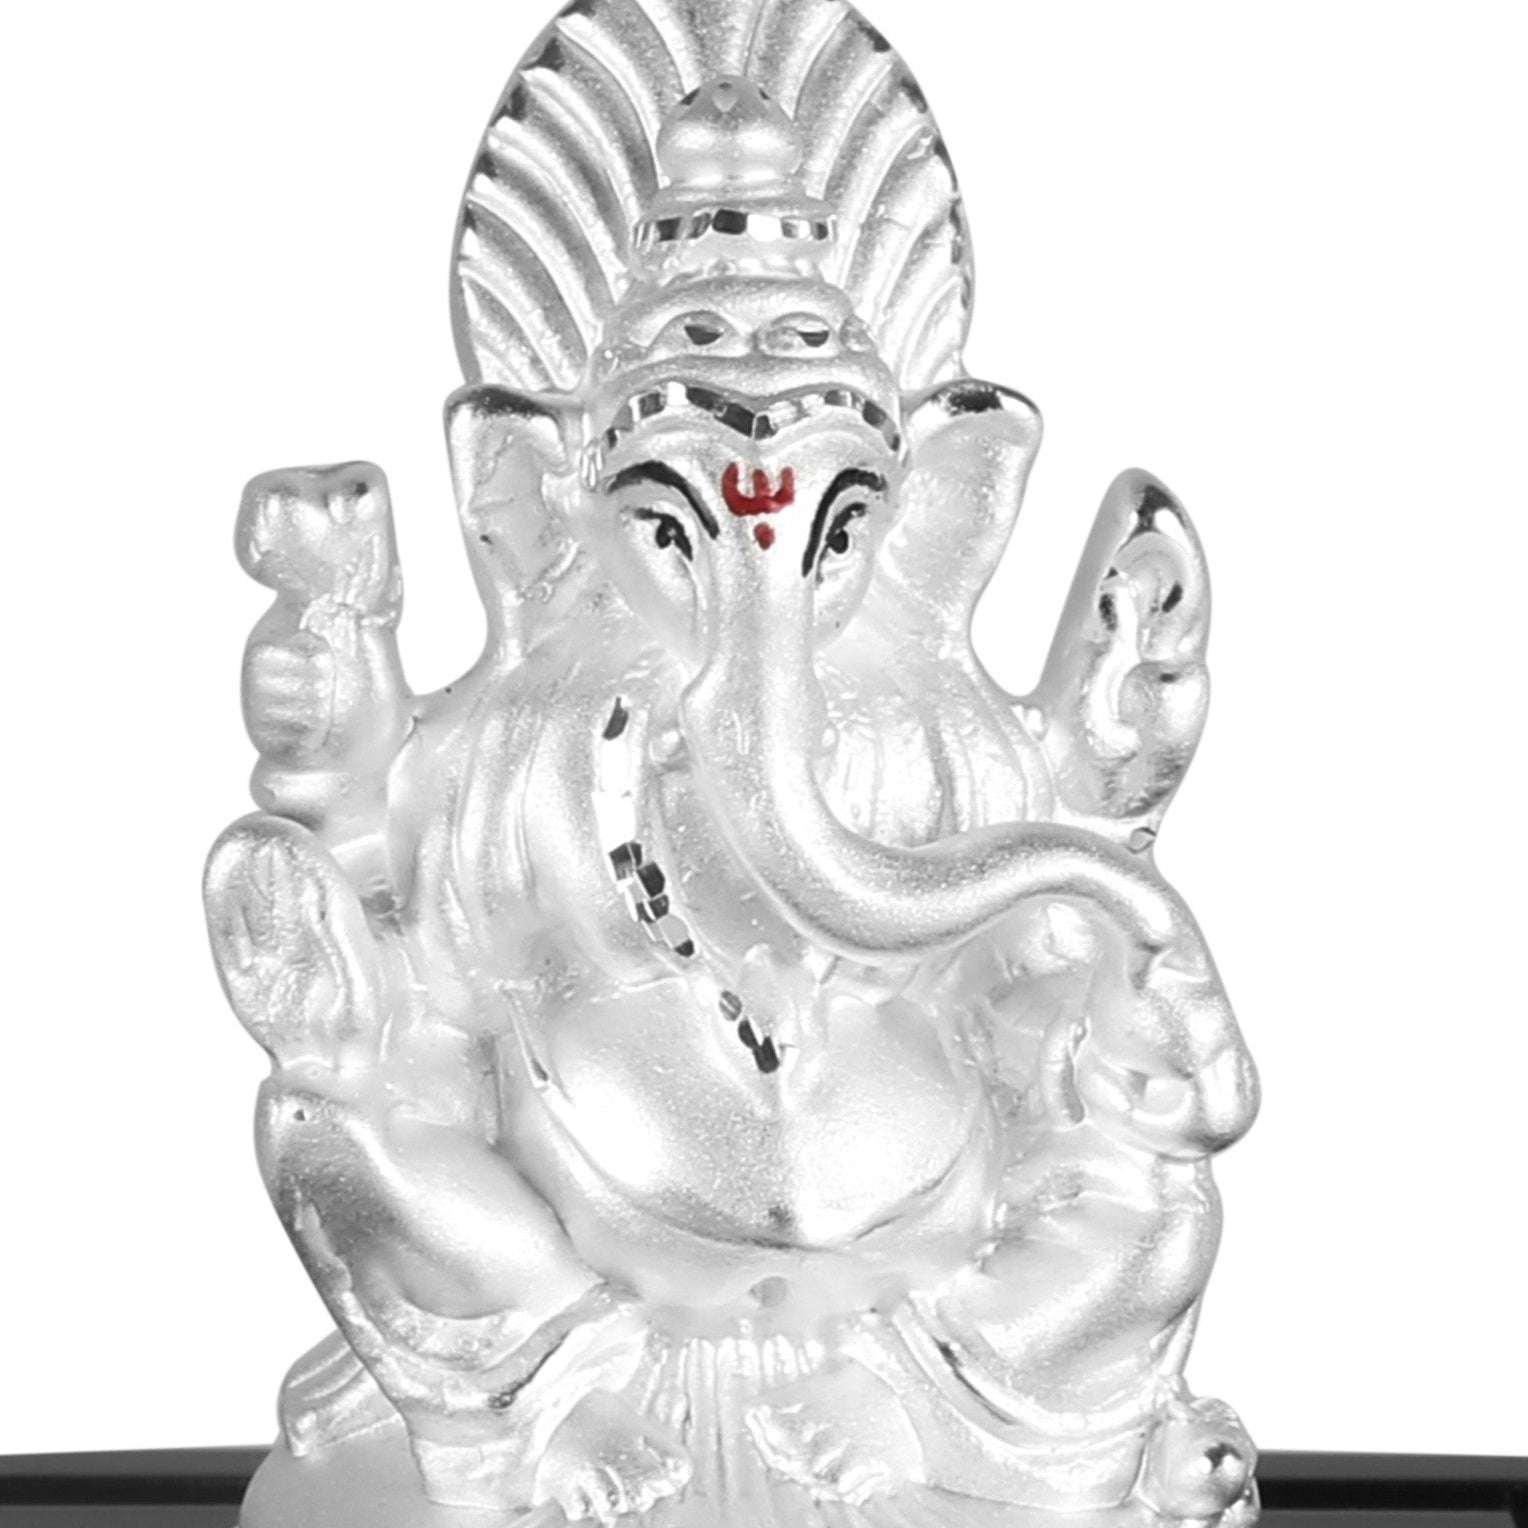 999 Pure Silver Ganesha Idol By Krysaliis Isvara - Krign_26 Idols